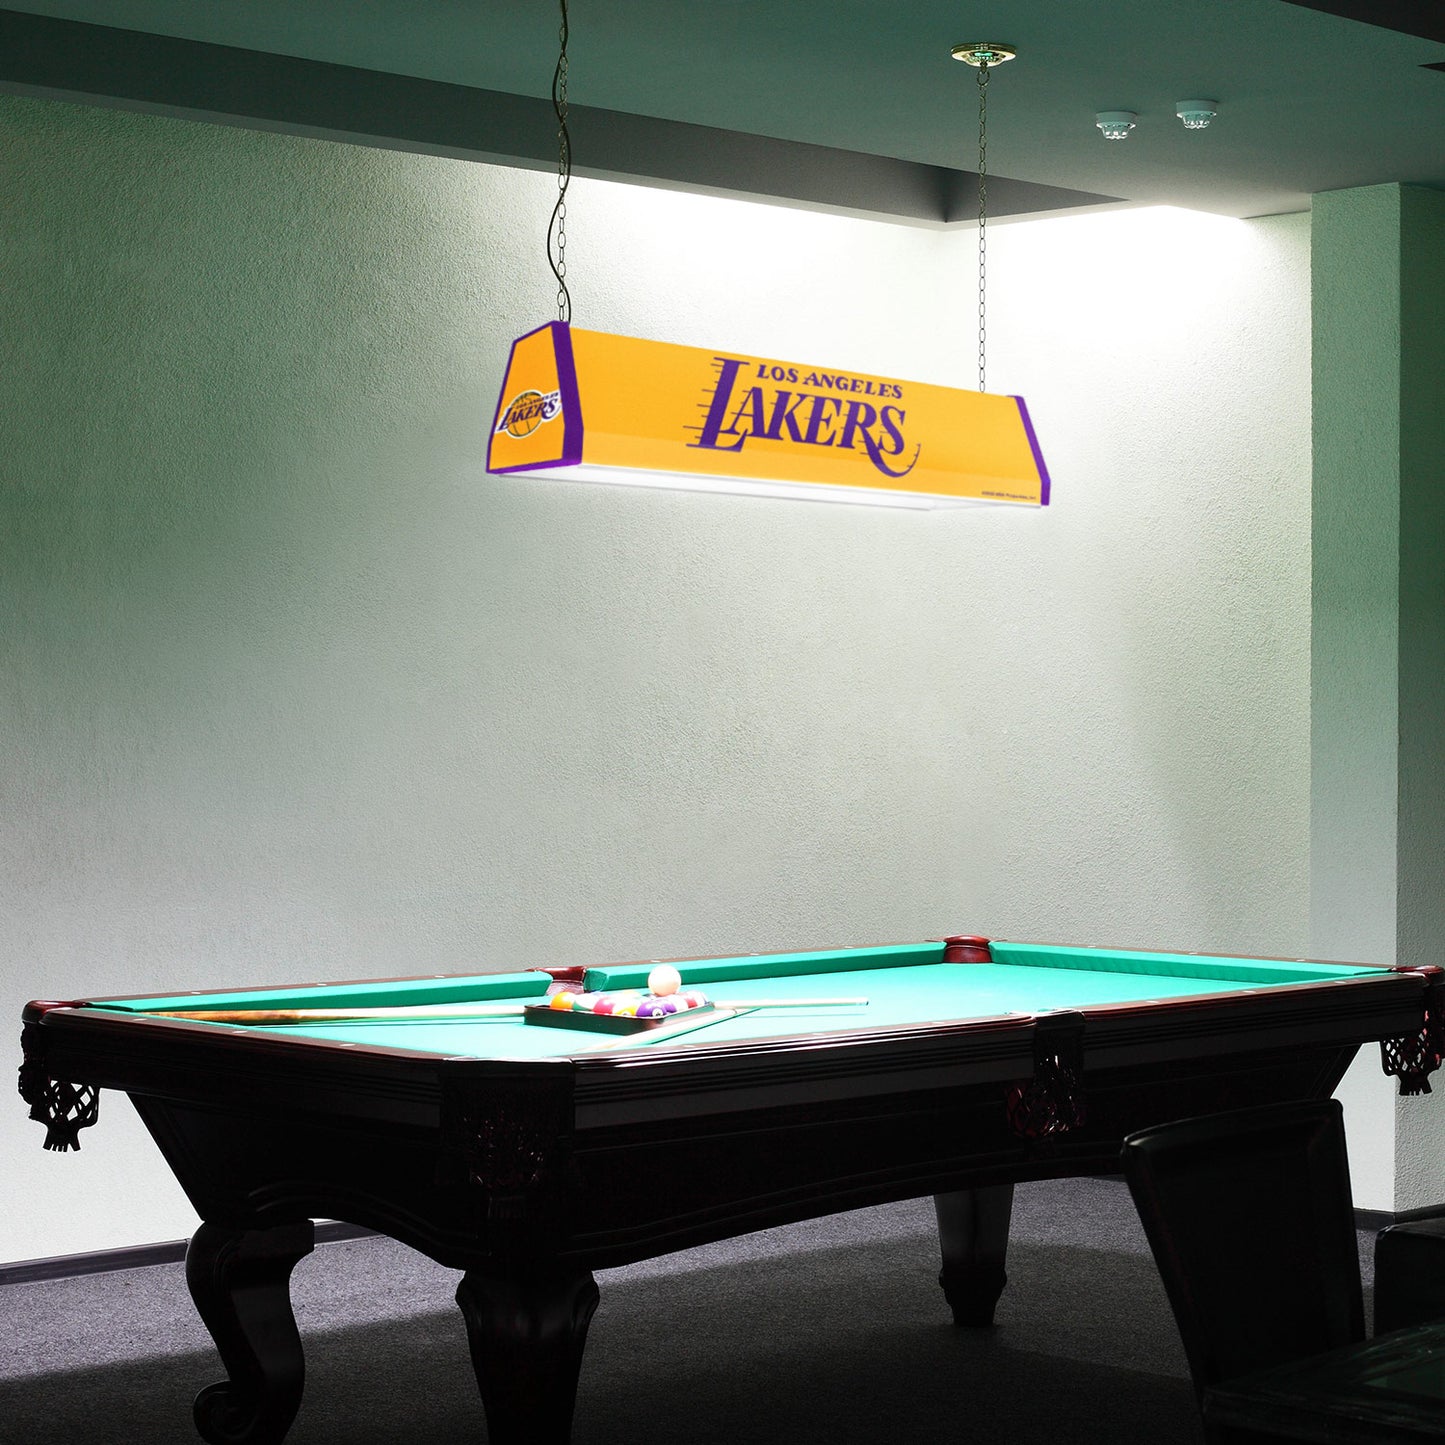 Los Angeles Lakers Standard Pool Table Light Room View